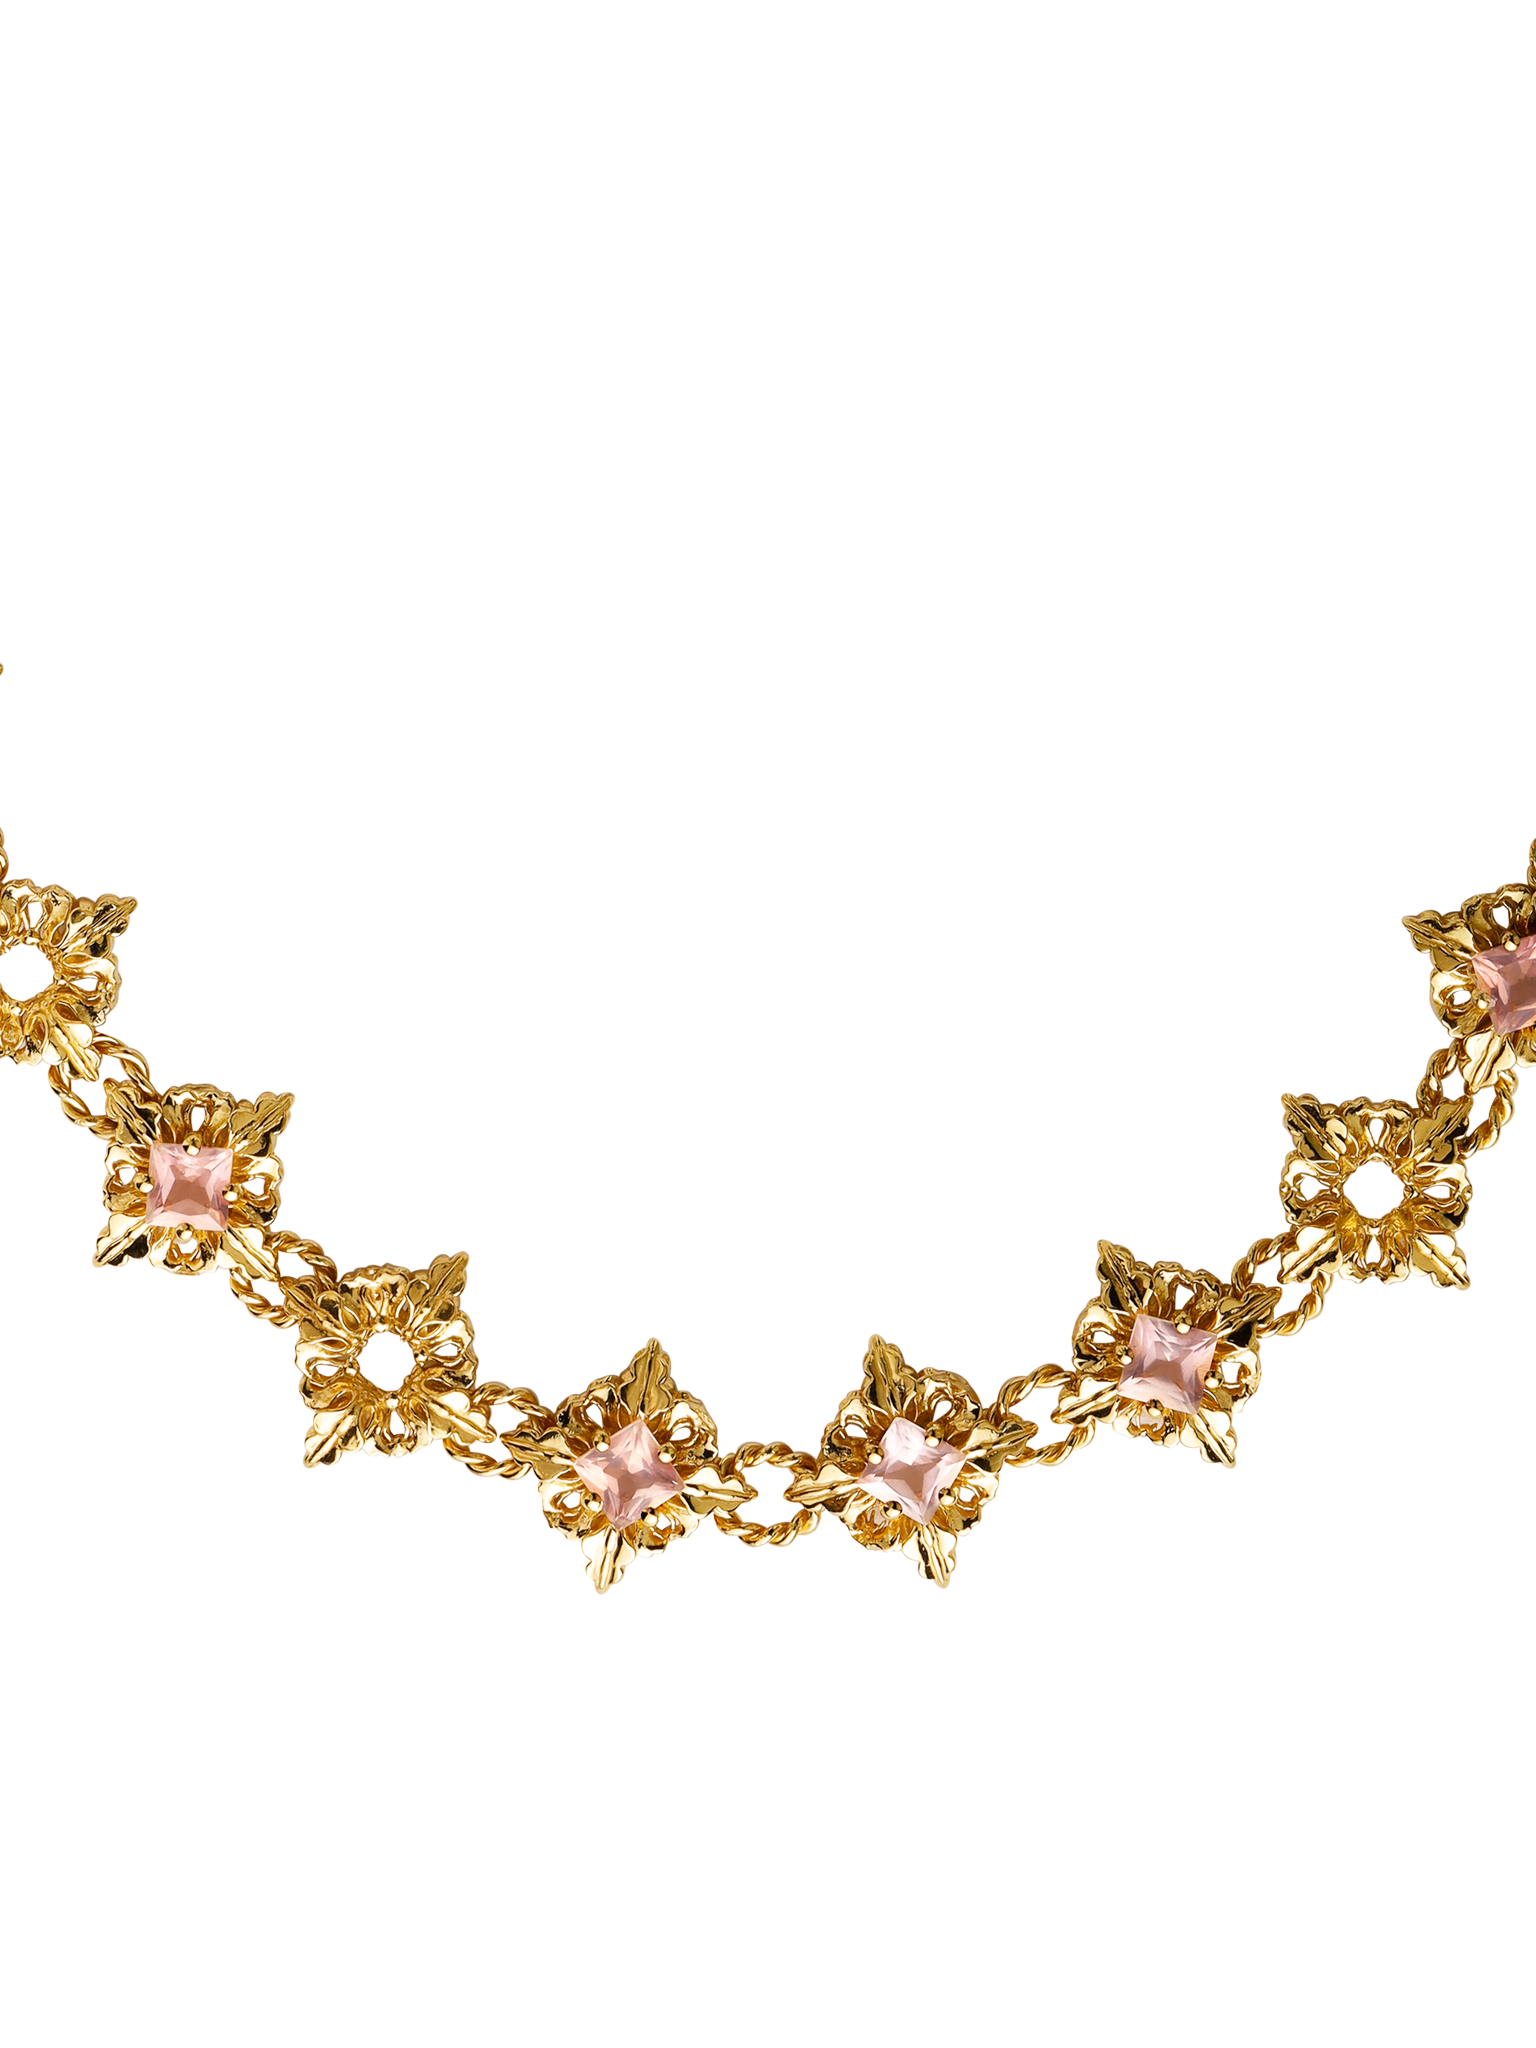 Allegorie blossom short necklace